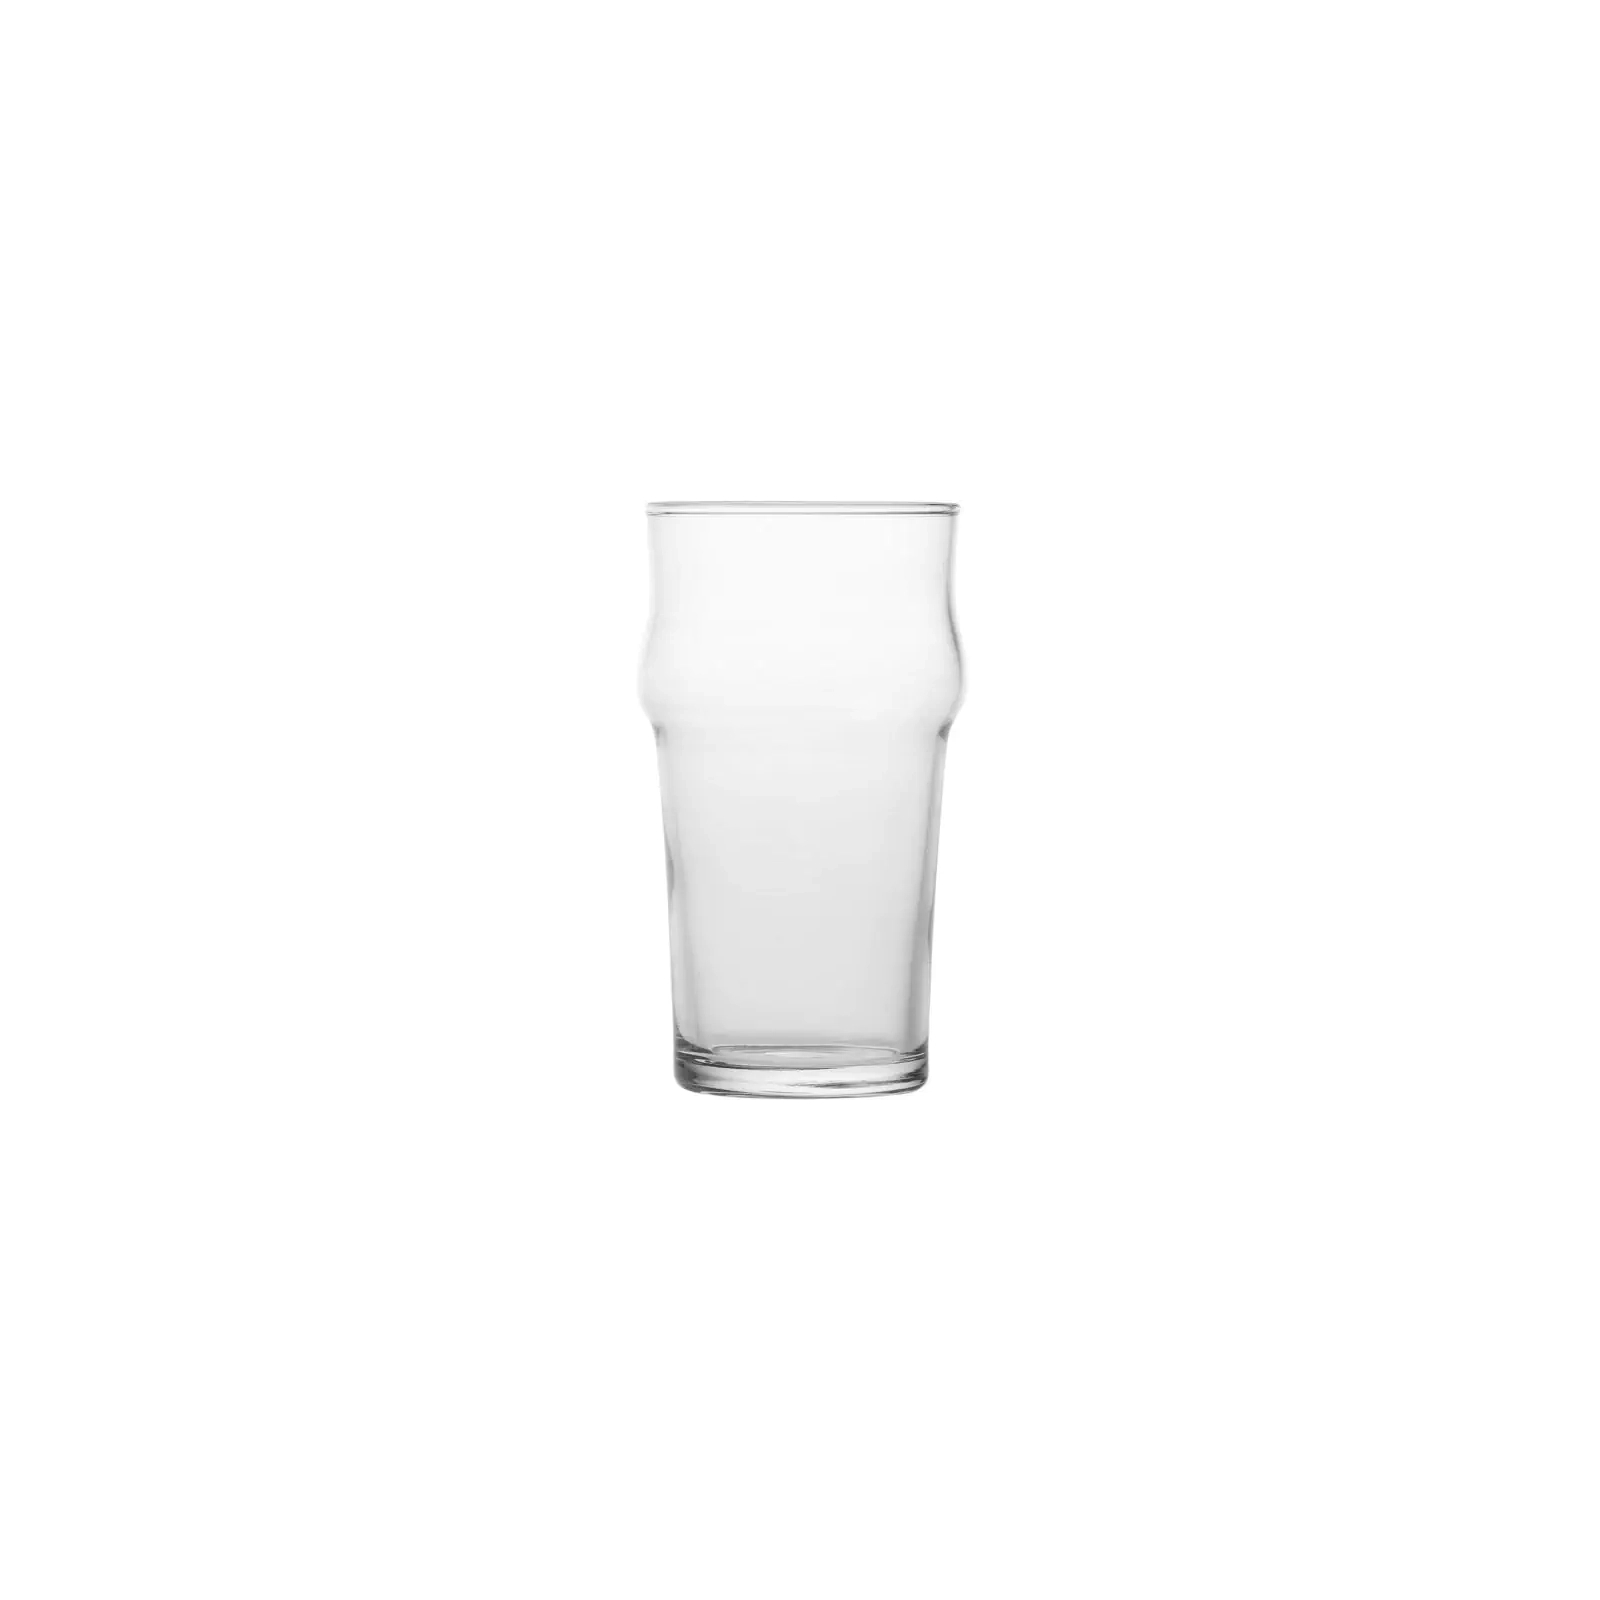 Склянка Arcoroc Nonic для пива 570 мл (49357)